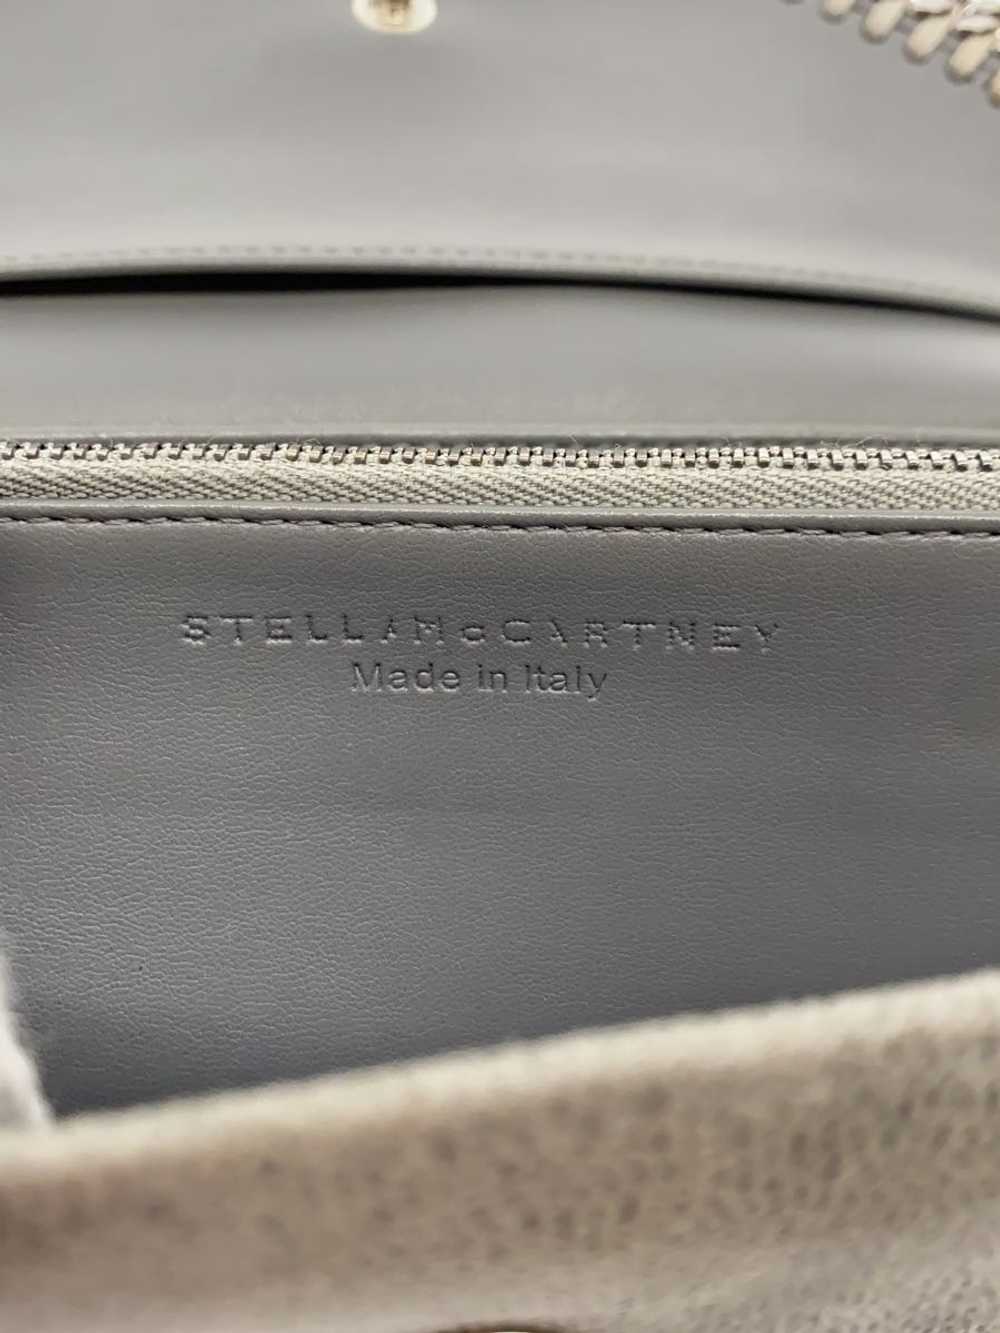 Stellamccartney Long Wallet Leather Gry Women - image 3